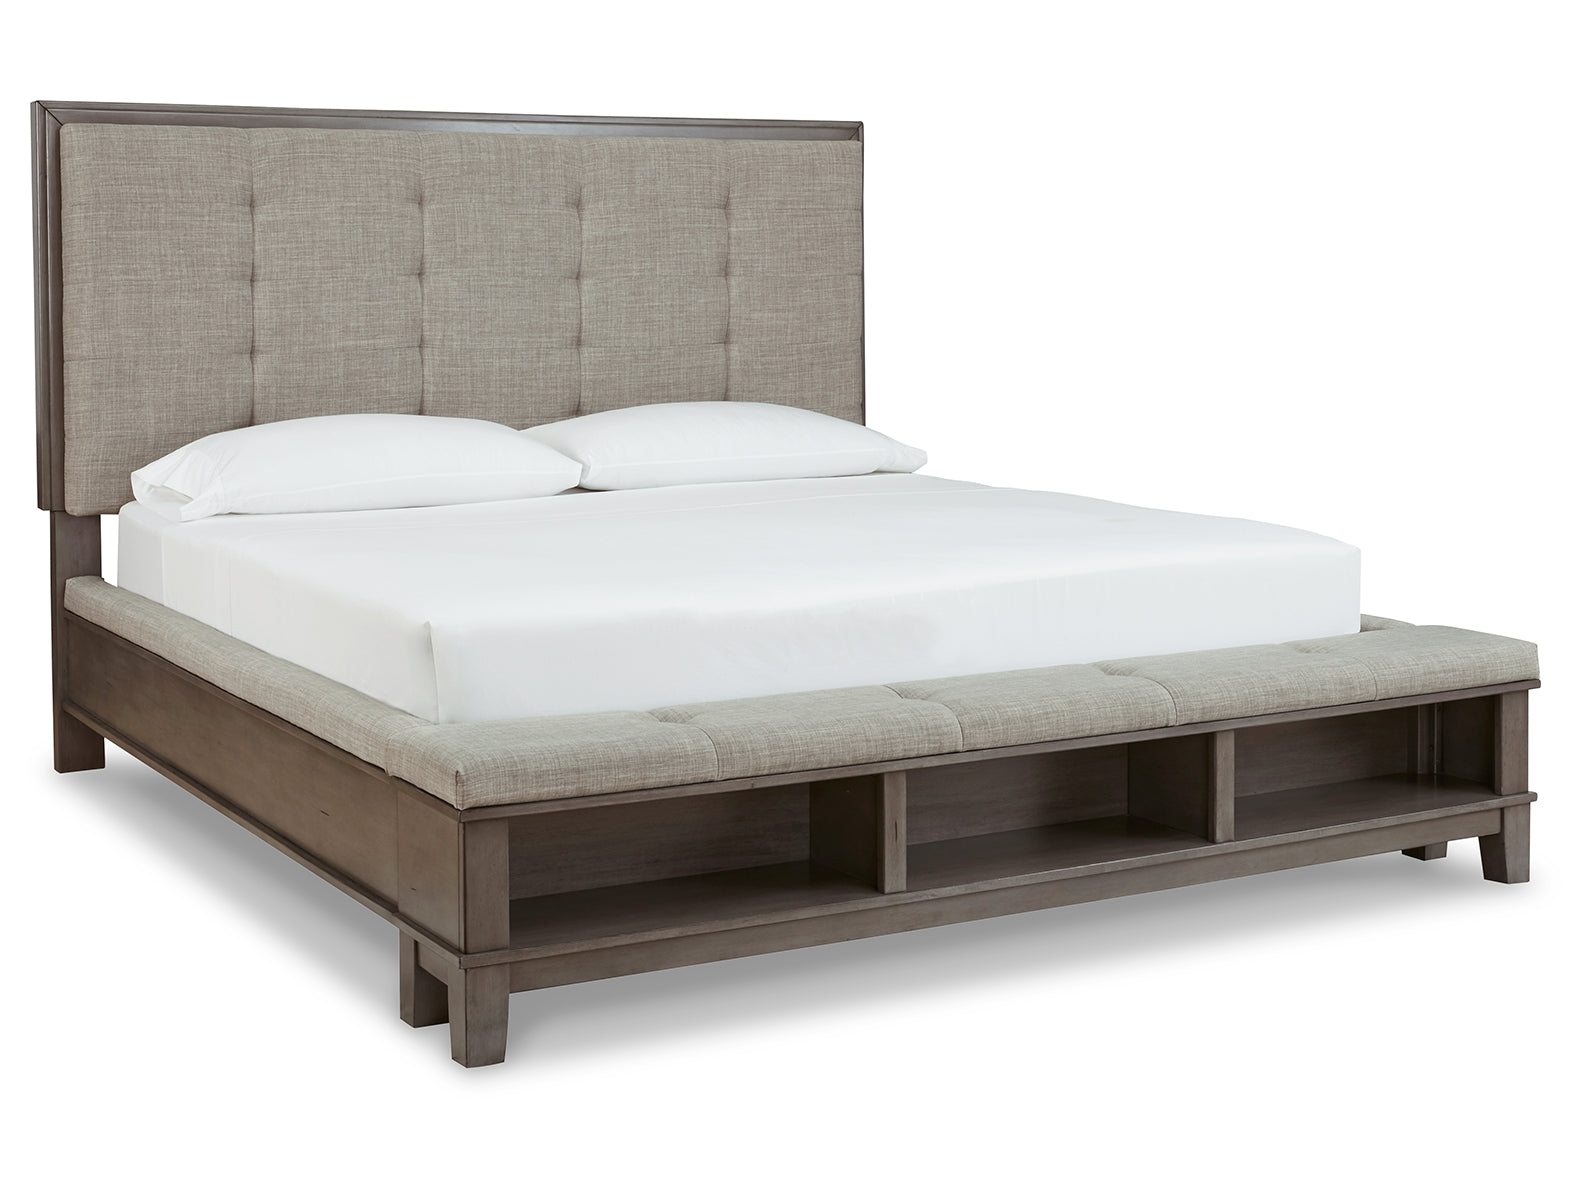 Hallanden Queen Panel Bed with Storage with Dresser